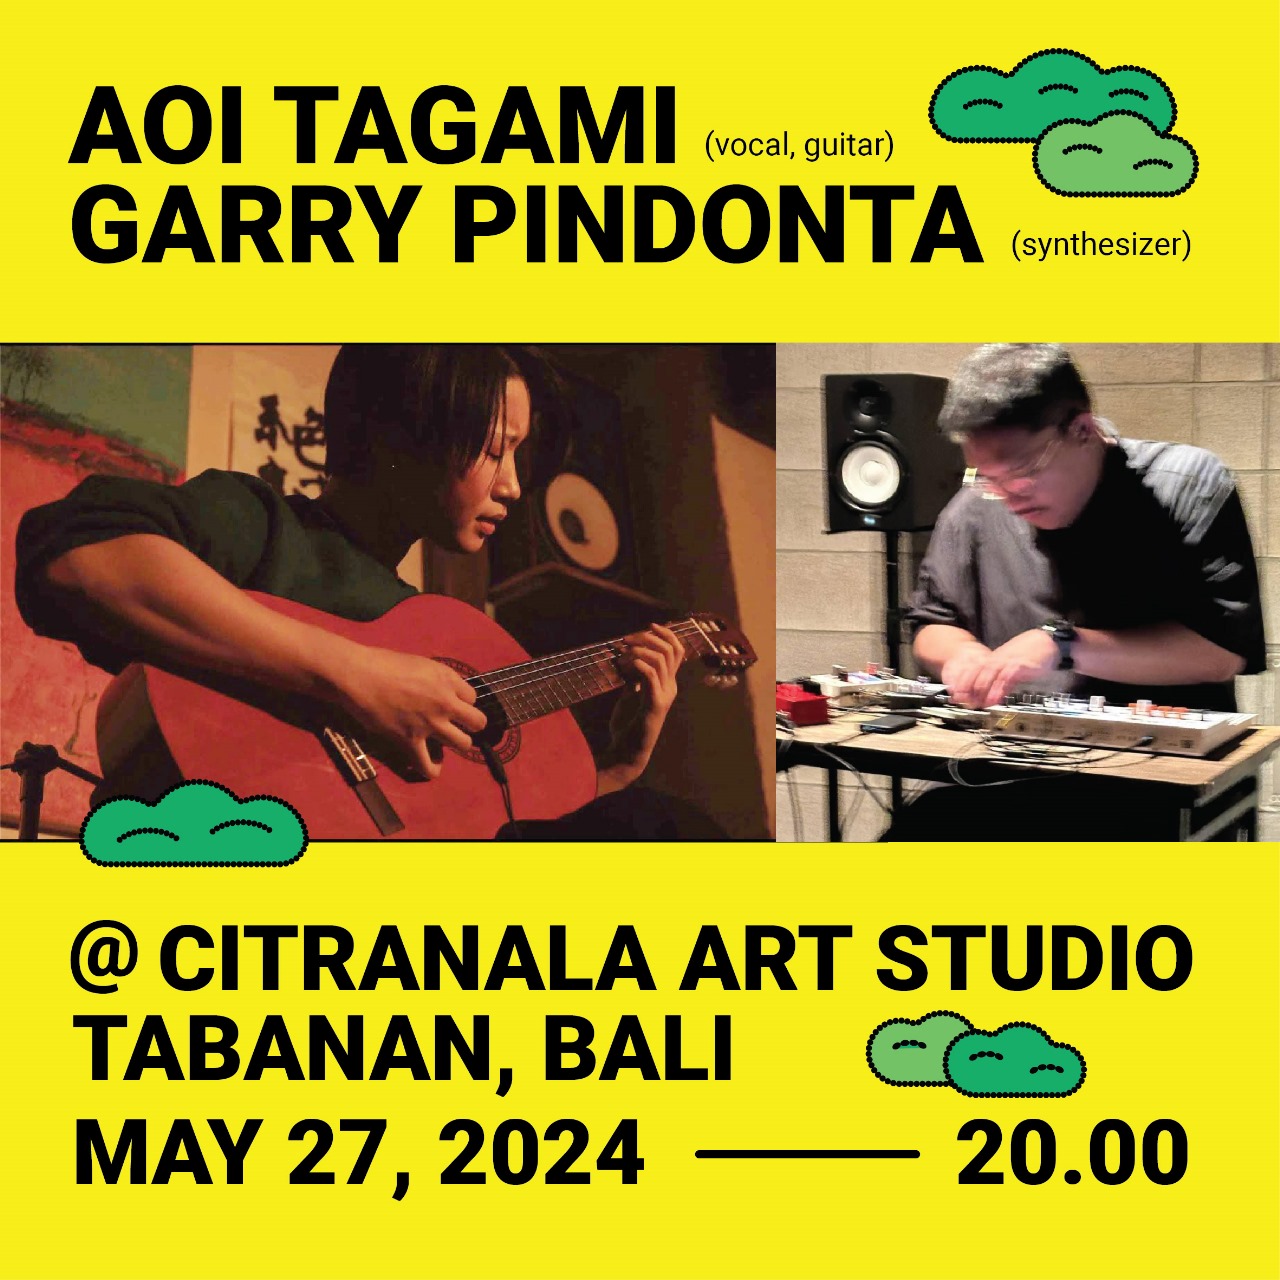 Live at Citranala art studio